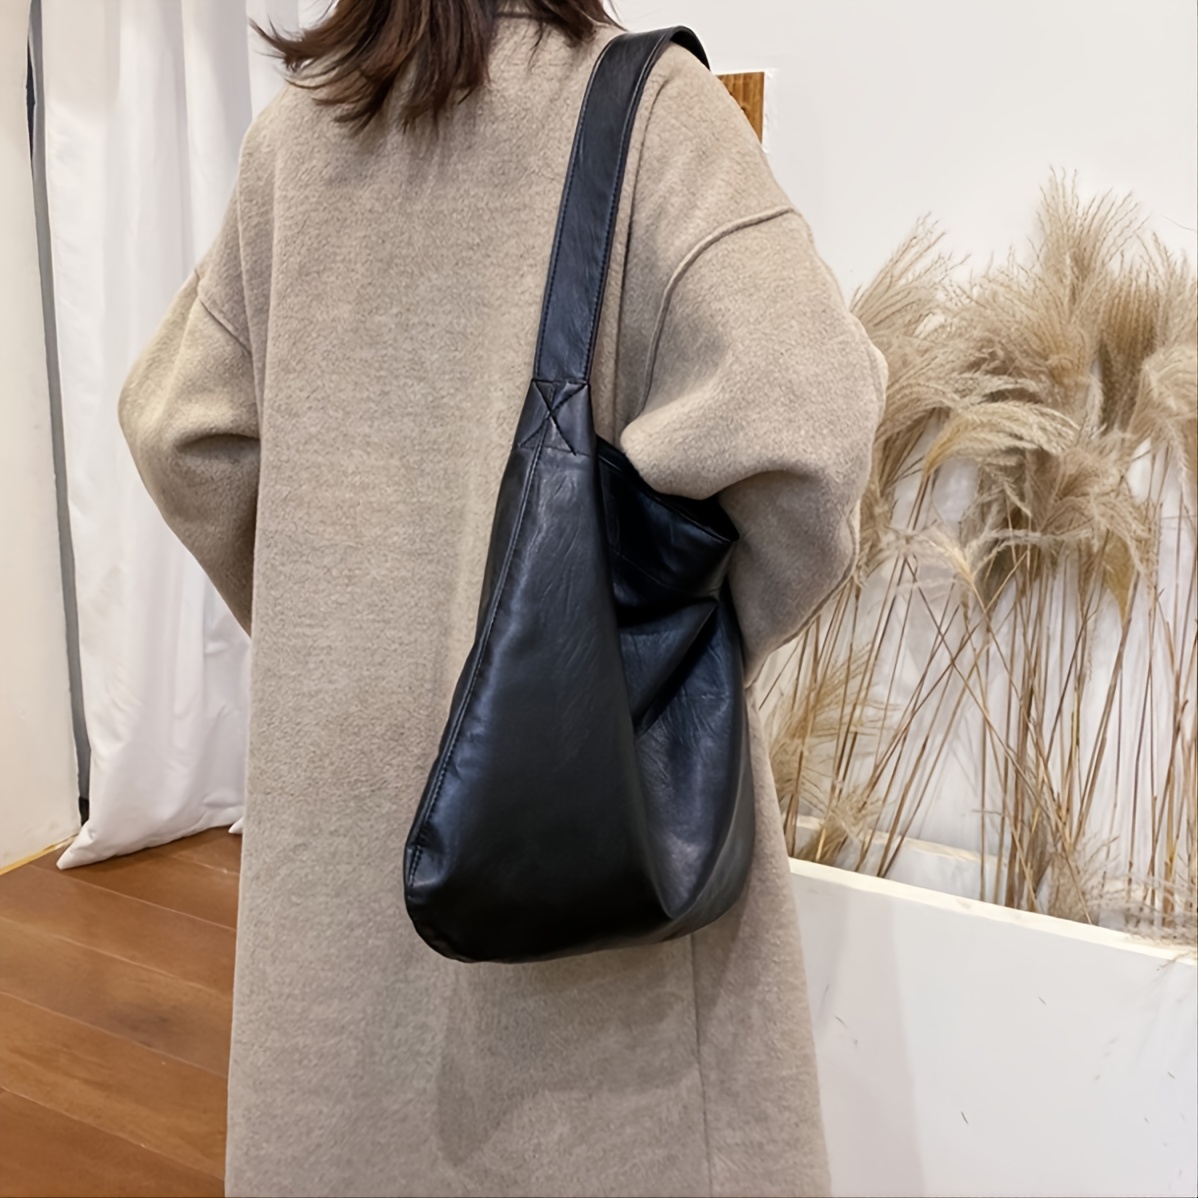 Soft Leather Handbags Black Leather Hobo Bag for Women Large